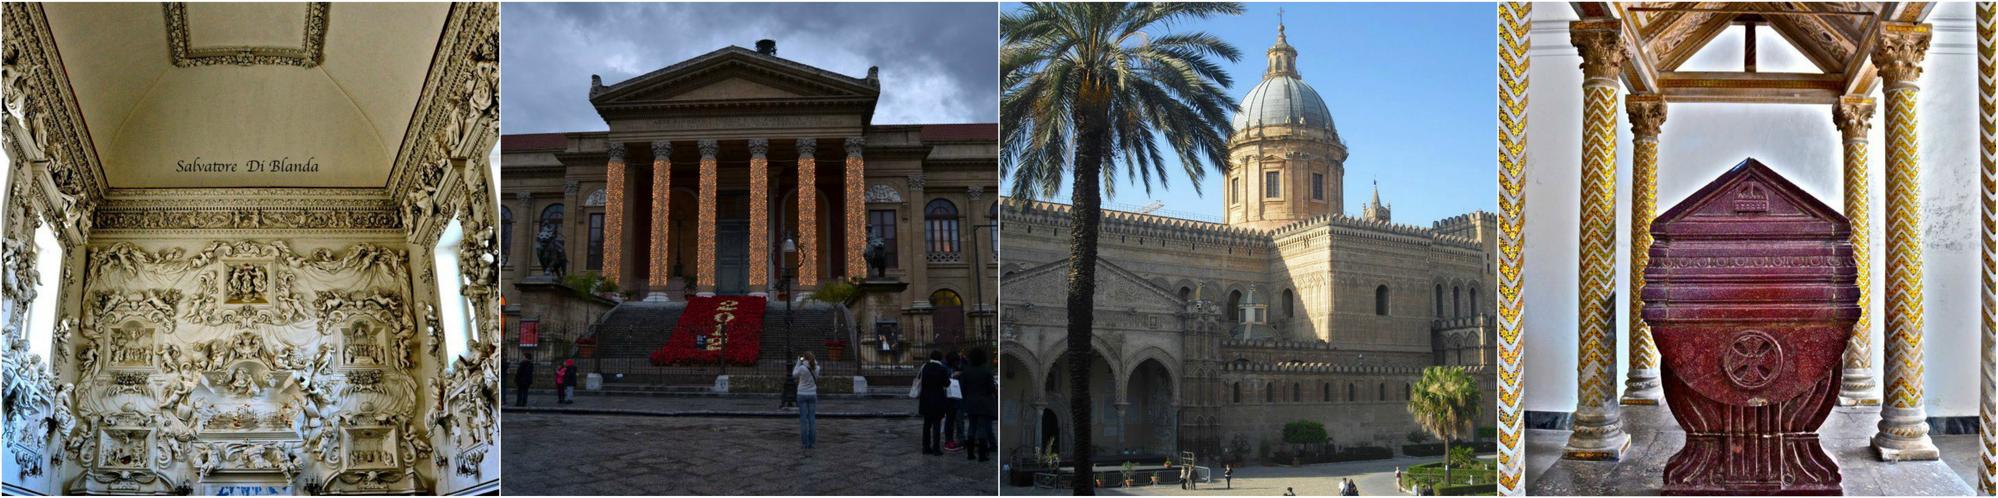 Sicily DMC Incentives, Palermo and Monreale